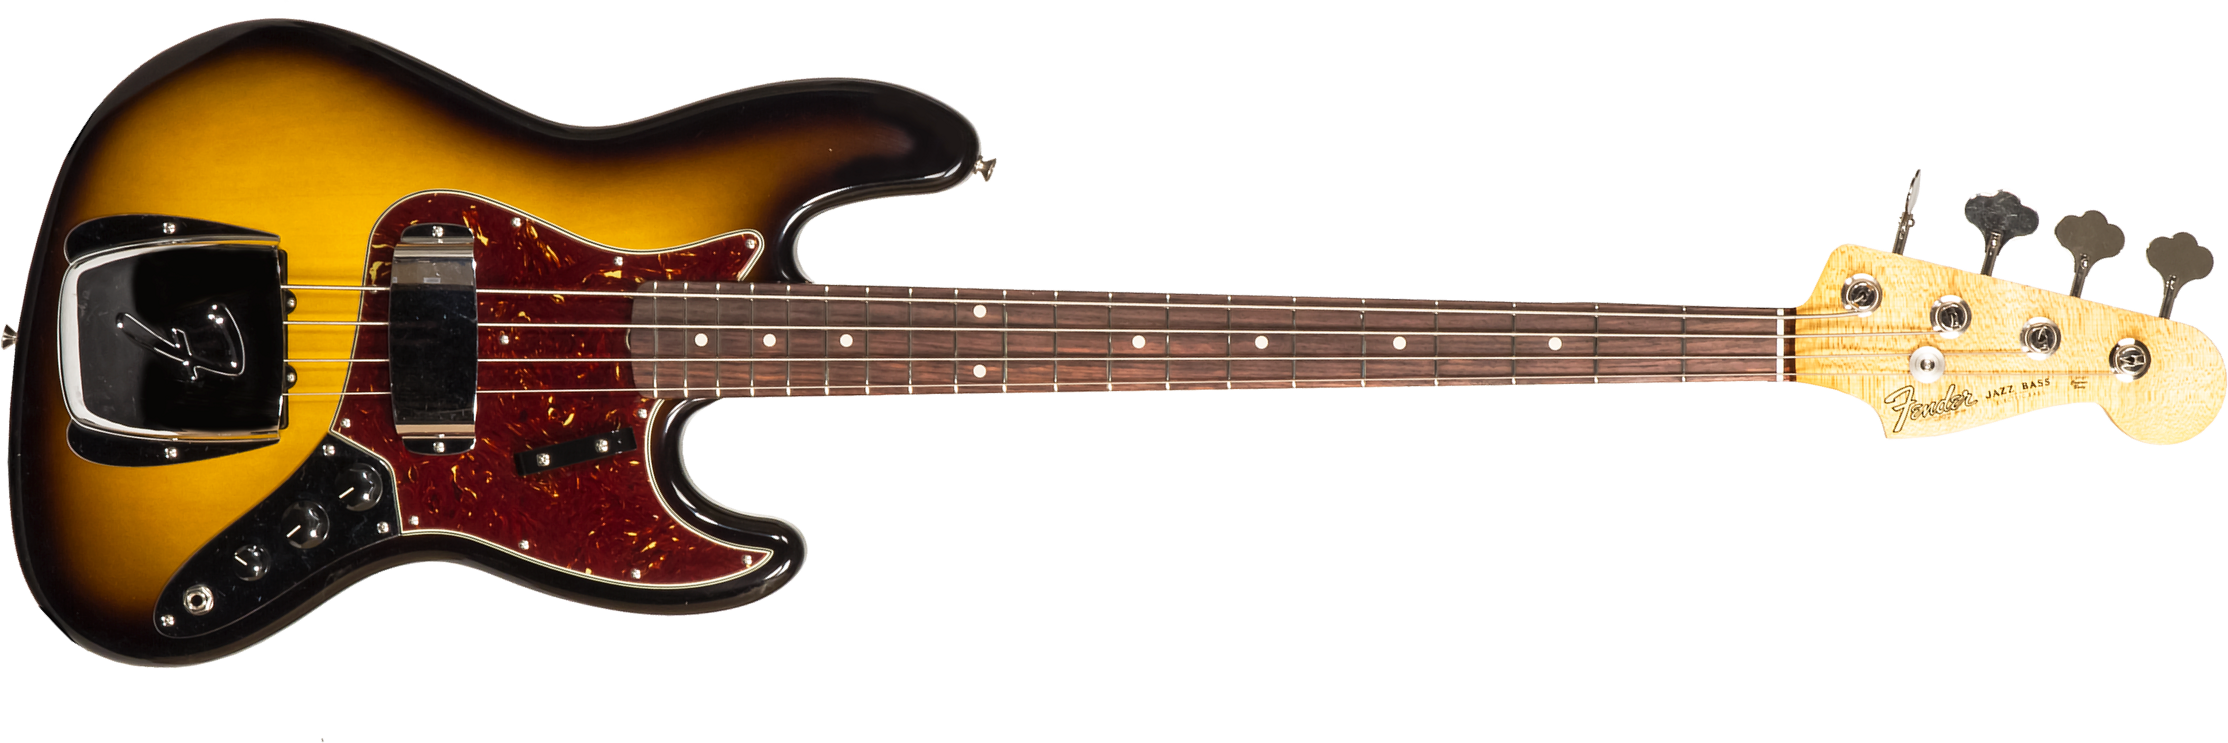 Fender Custom Shop Jazz Bass 1964 Rw #r126513 - Closet Classic 2-color Sunburst - Solid body elektrische bas - Main picture